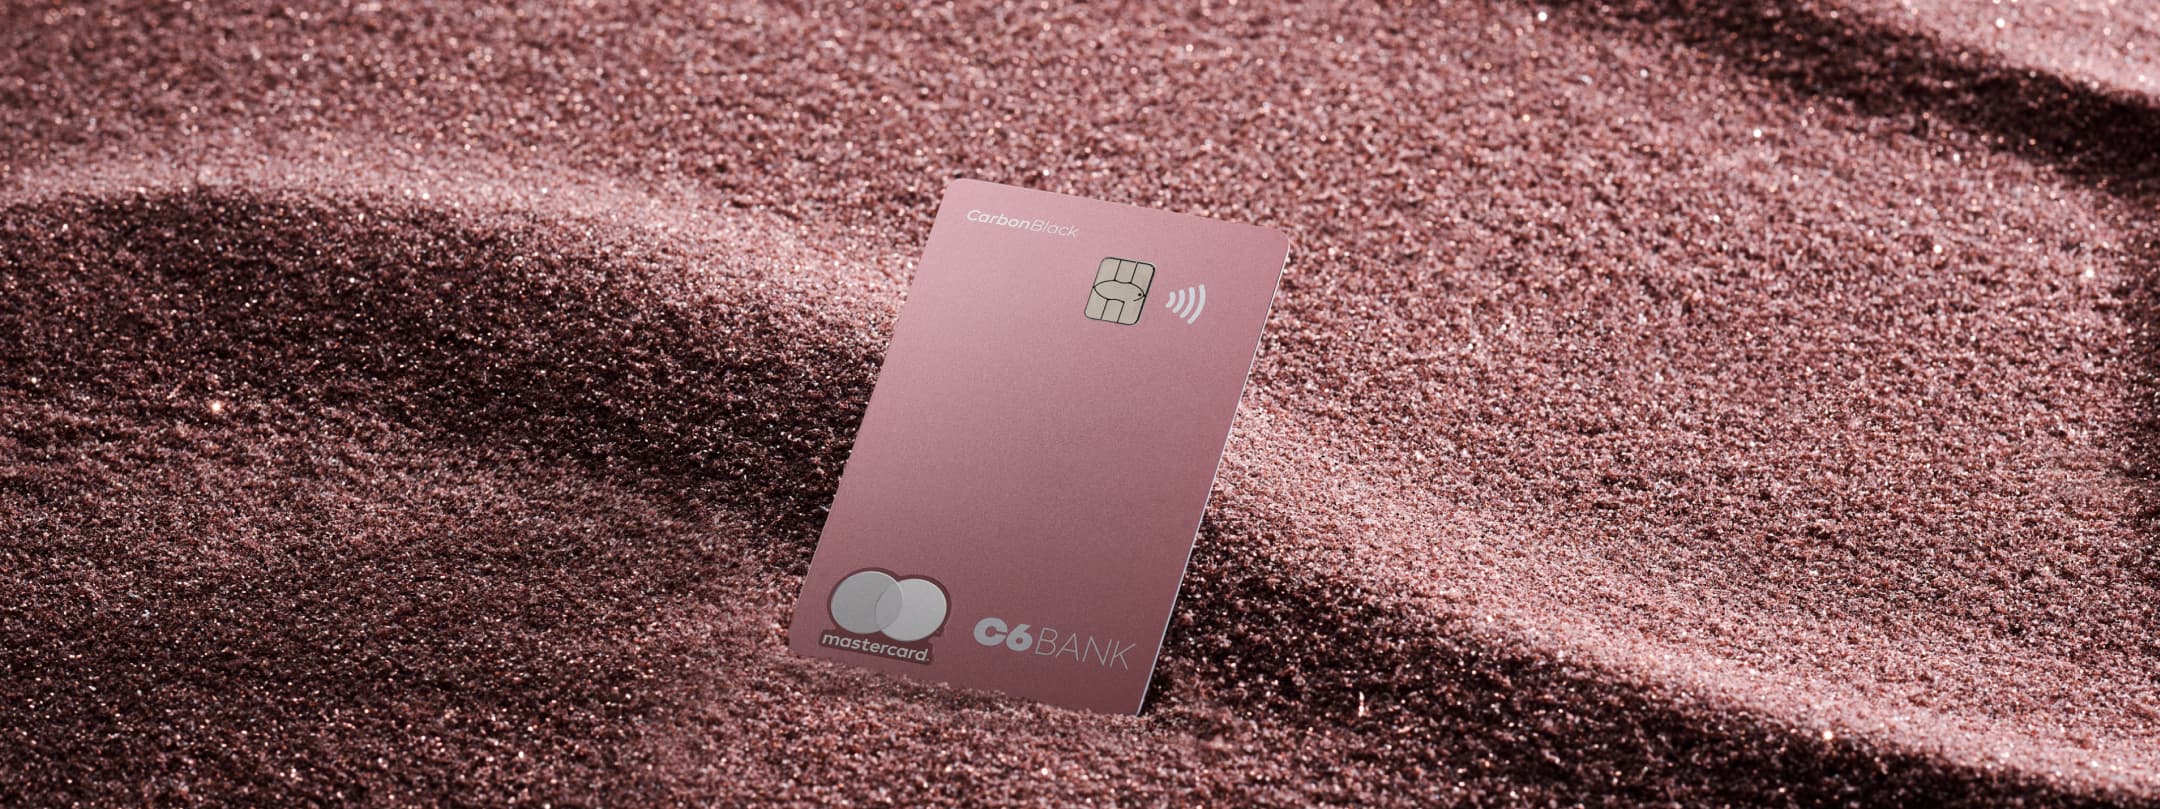 Cartão de Crédito C6 Carbon Mastercard Black na cor pink sobre fundo rosa